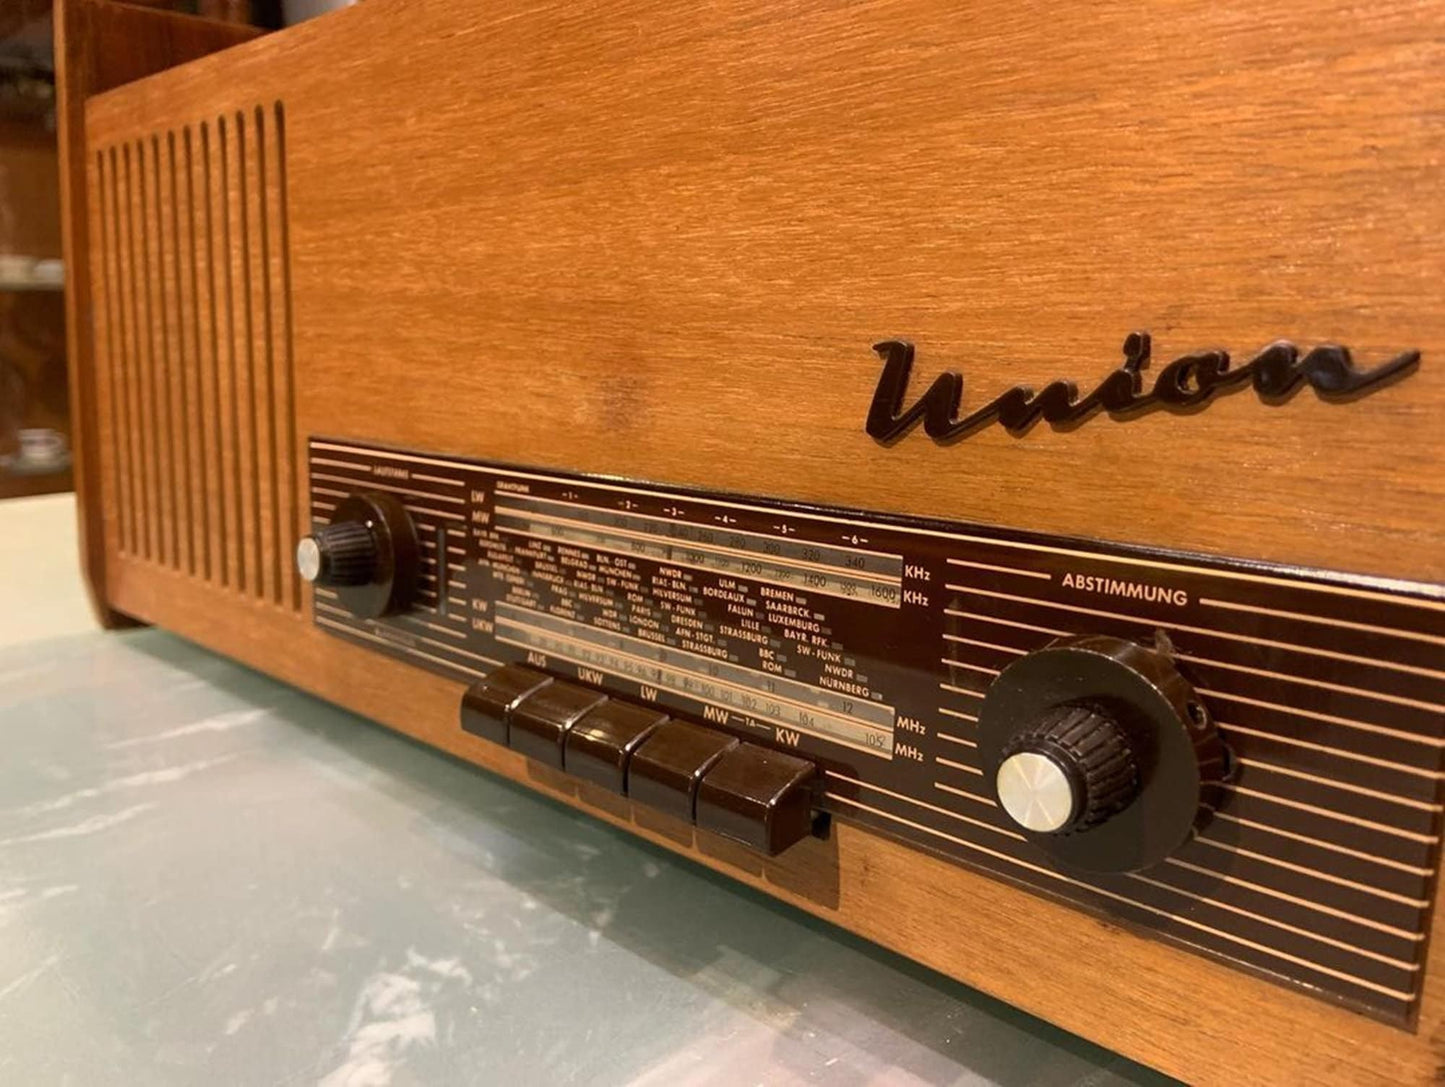 Germany Union Lamp Radio With Pikap| Vintage Radio | Orjinal Old Radio | Radio | Lamp Radio |, Turntable